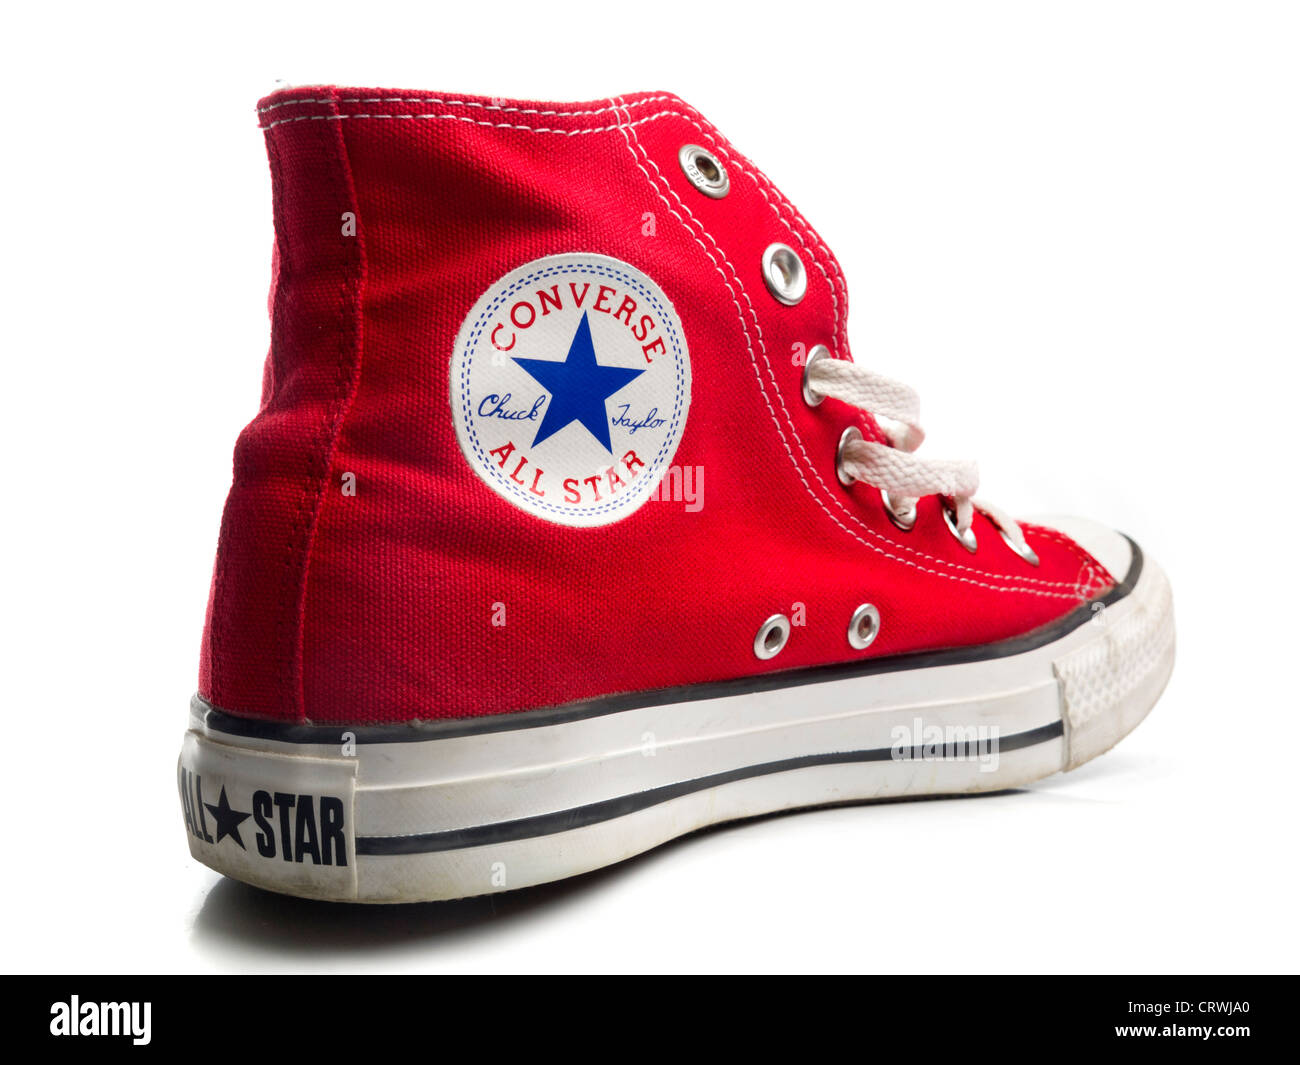 Rojo Converse All Star shoe Fotografía stock - Alamy